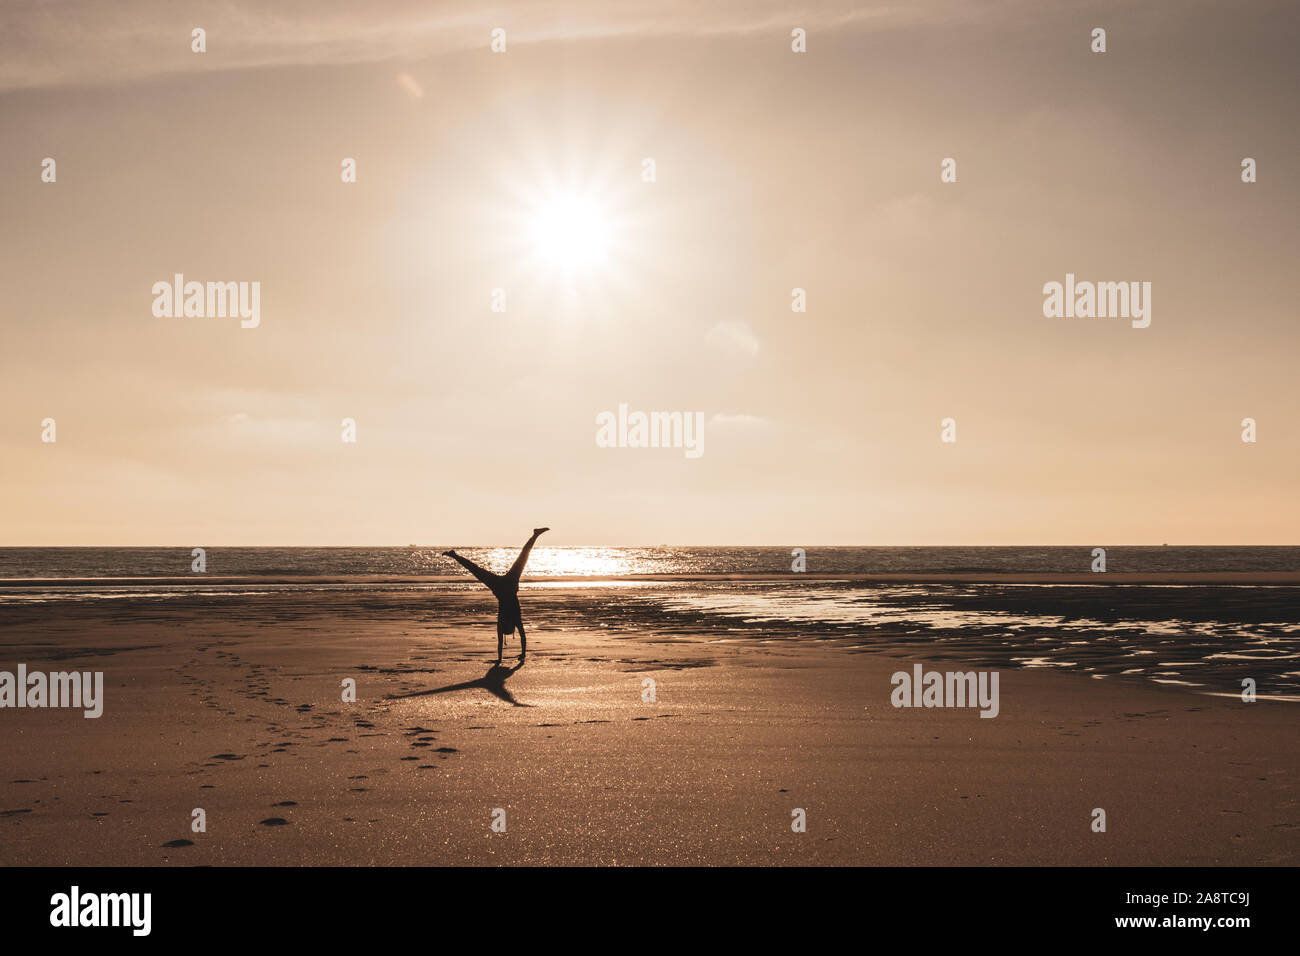 A woman doing a cartwheel on a beach in Fuerteventura, Spain at sunset Stock Photo